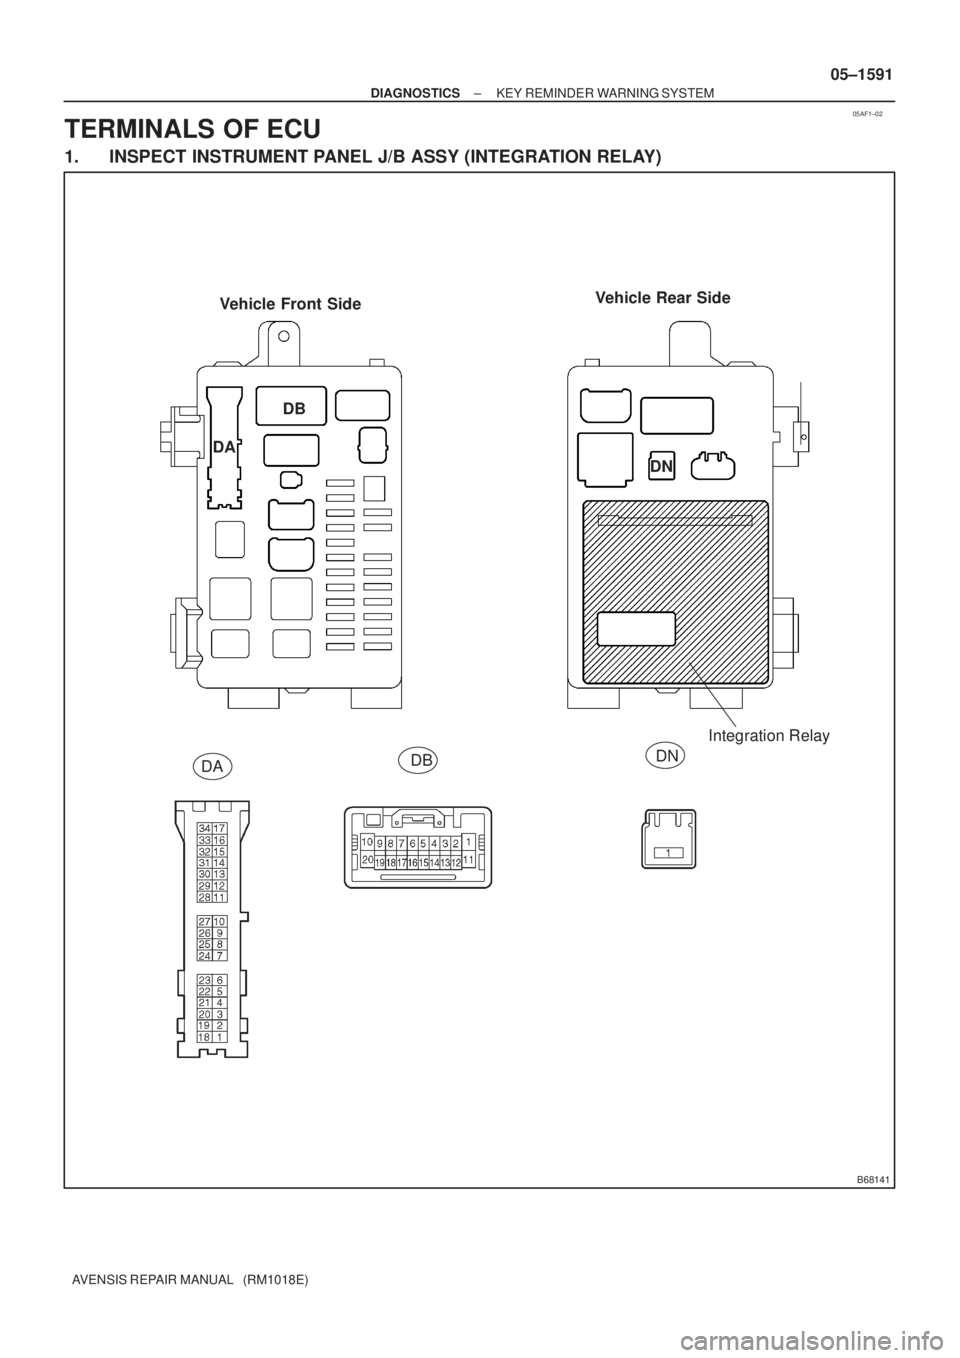 TOYOTA AVENSIS 2005  Service Repair Manual 05AF1±02
B68141
Vehicle Rear Side
Vehicle Front Side
Integration Relay
DN
DA
DN
DB
DA
DB
± DIAGNOSTICSKEY REMINDER WARNING SYSTEM
05±1591
AVENSIS REPAIR MANUAL   (RM1018E)
TERMINALS OF ECU
1. INSPE